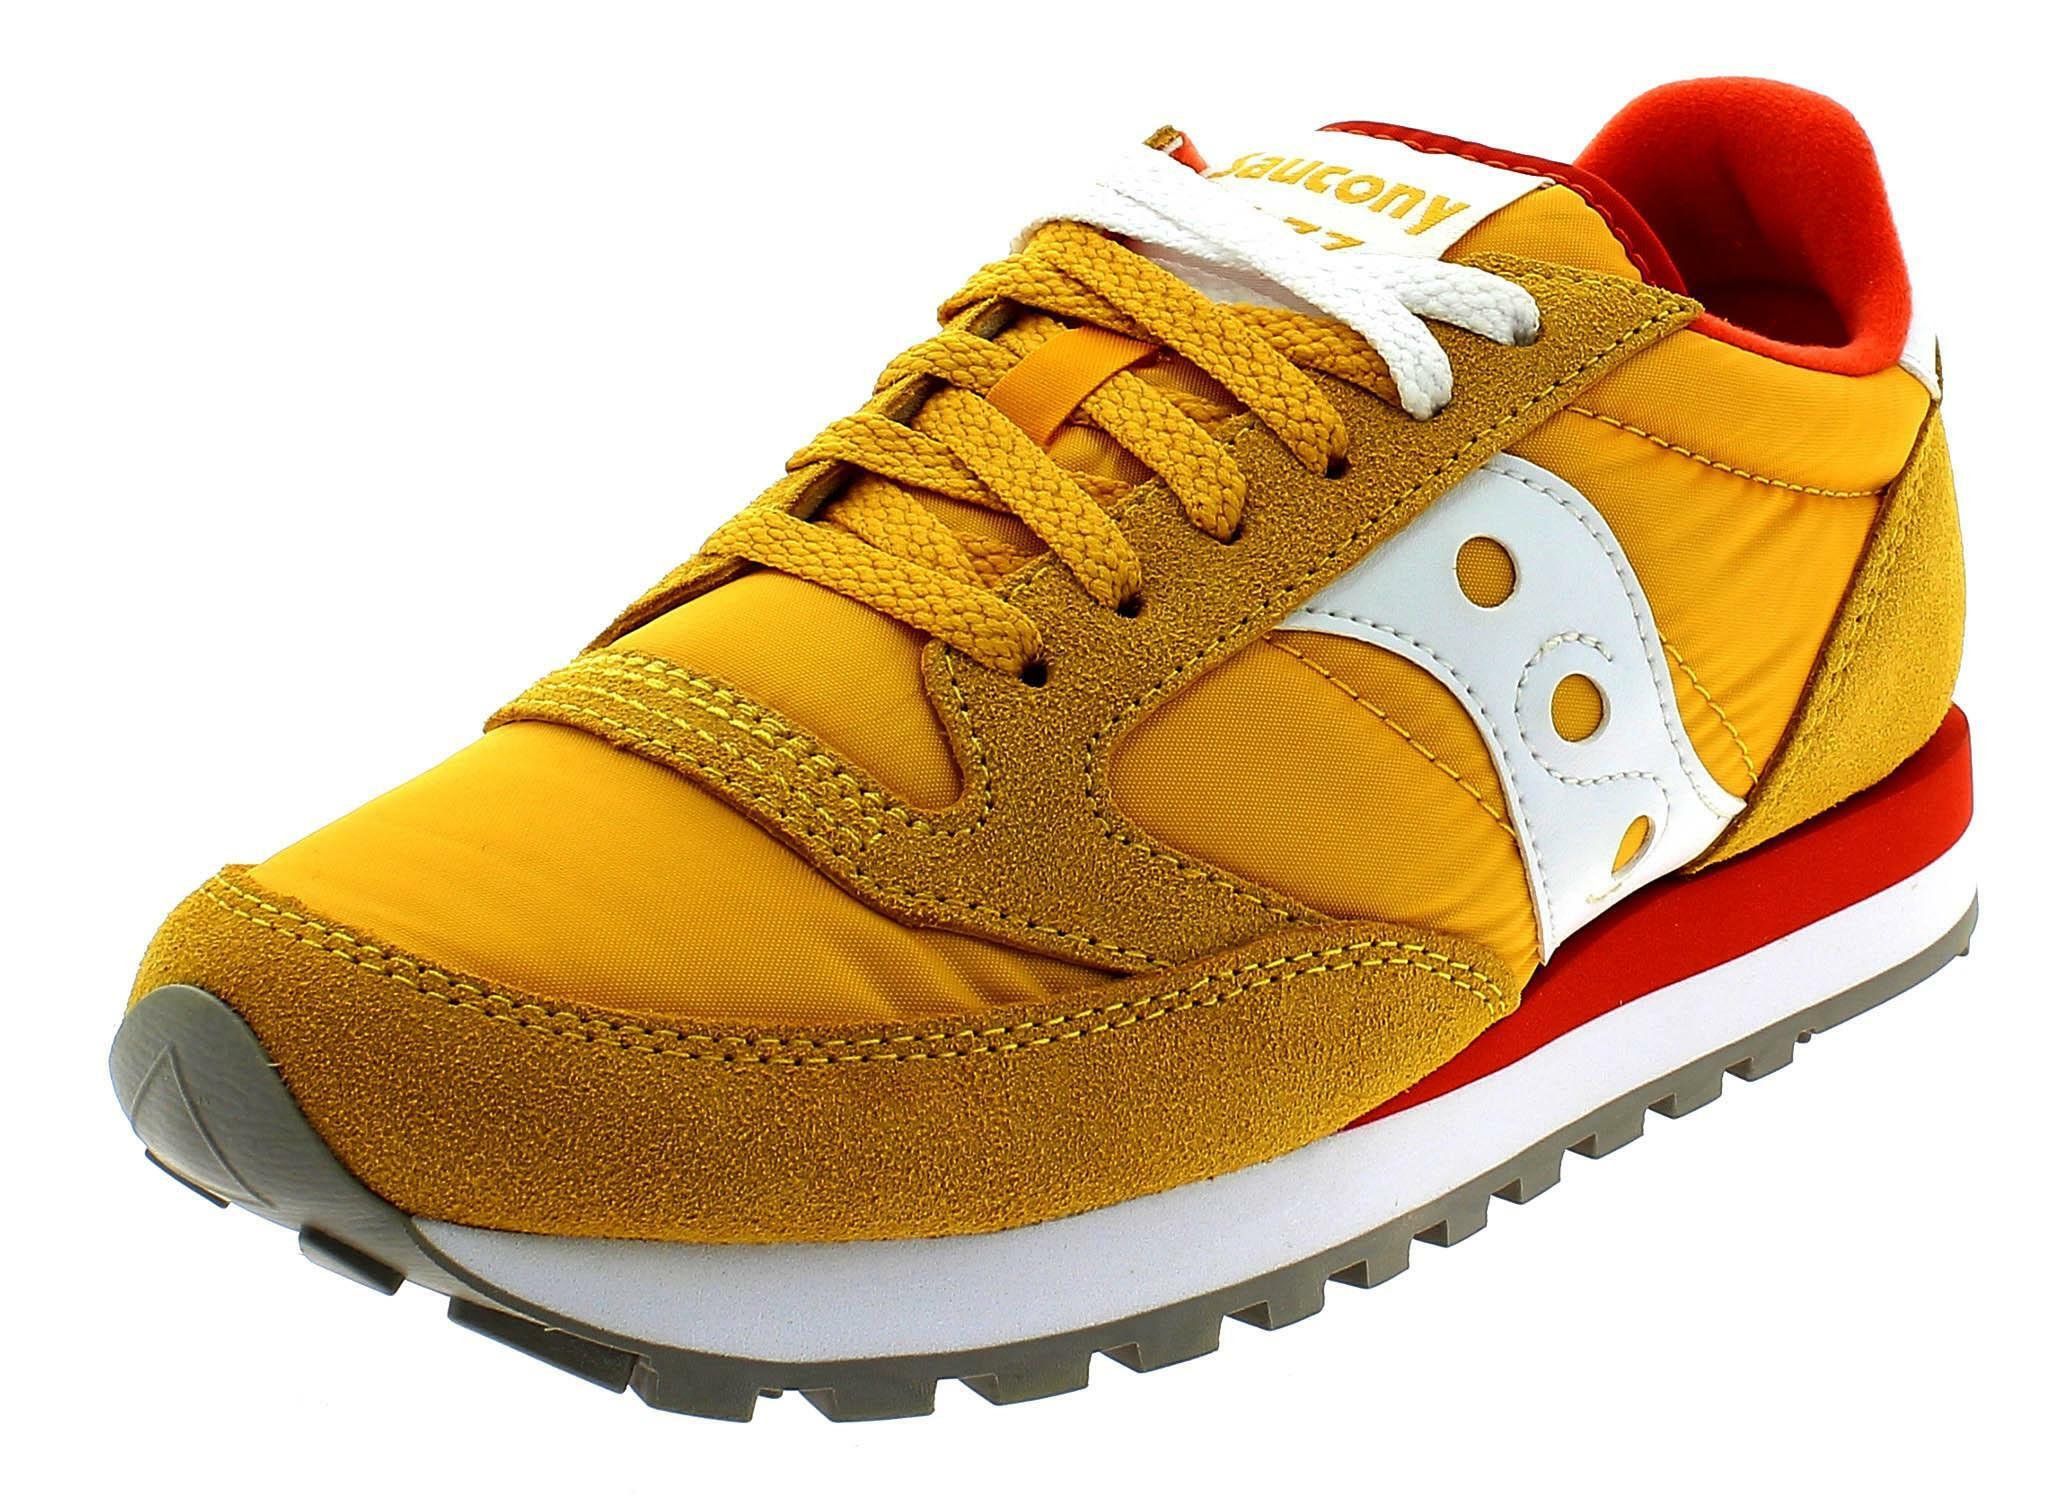 scarpe da ginnastica gialle